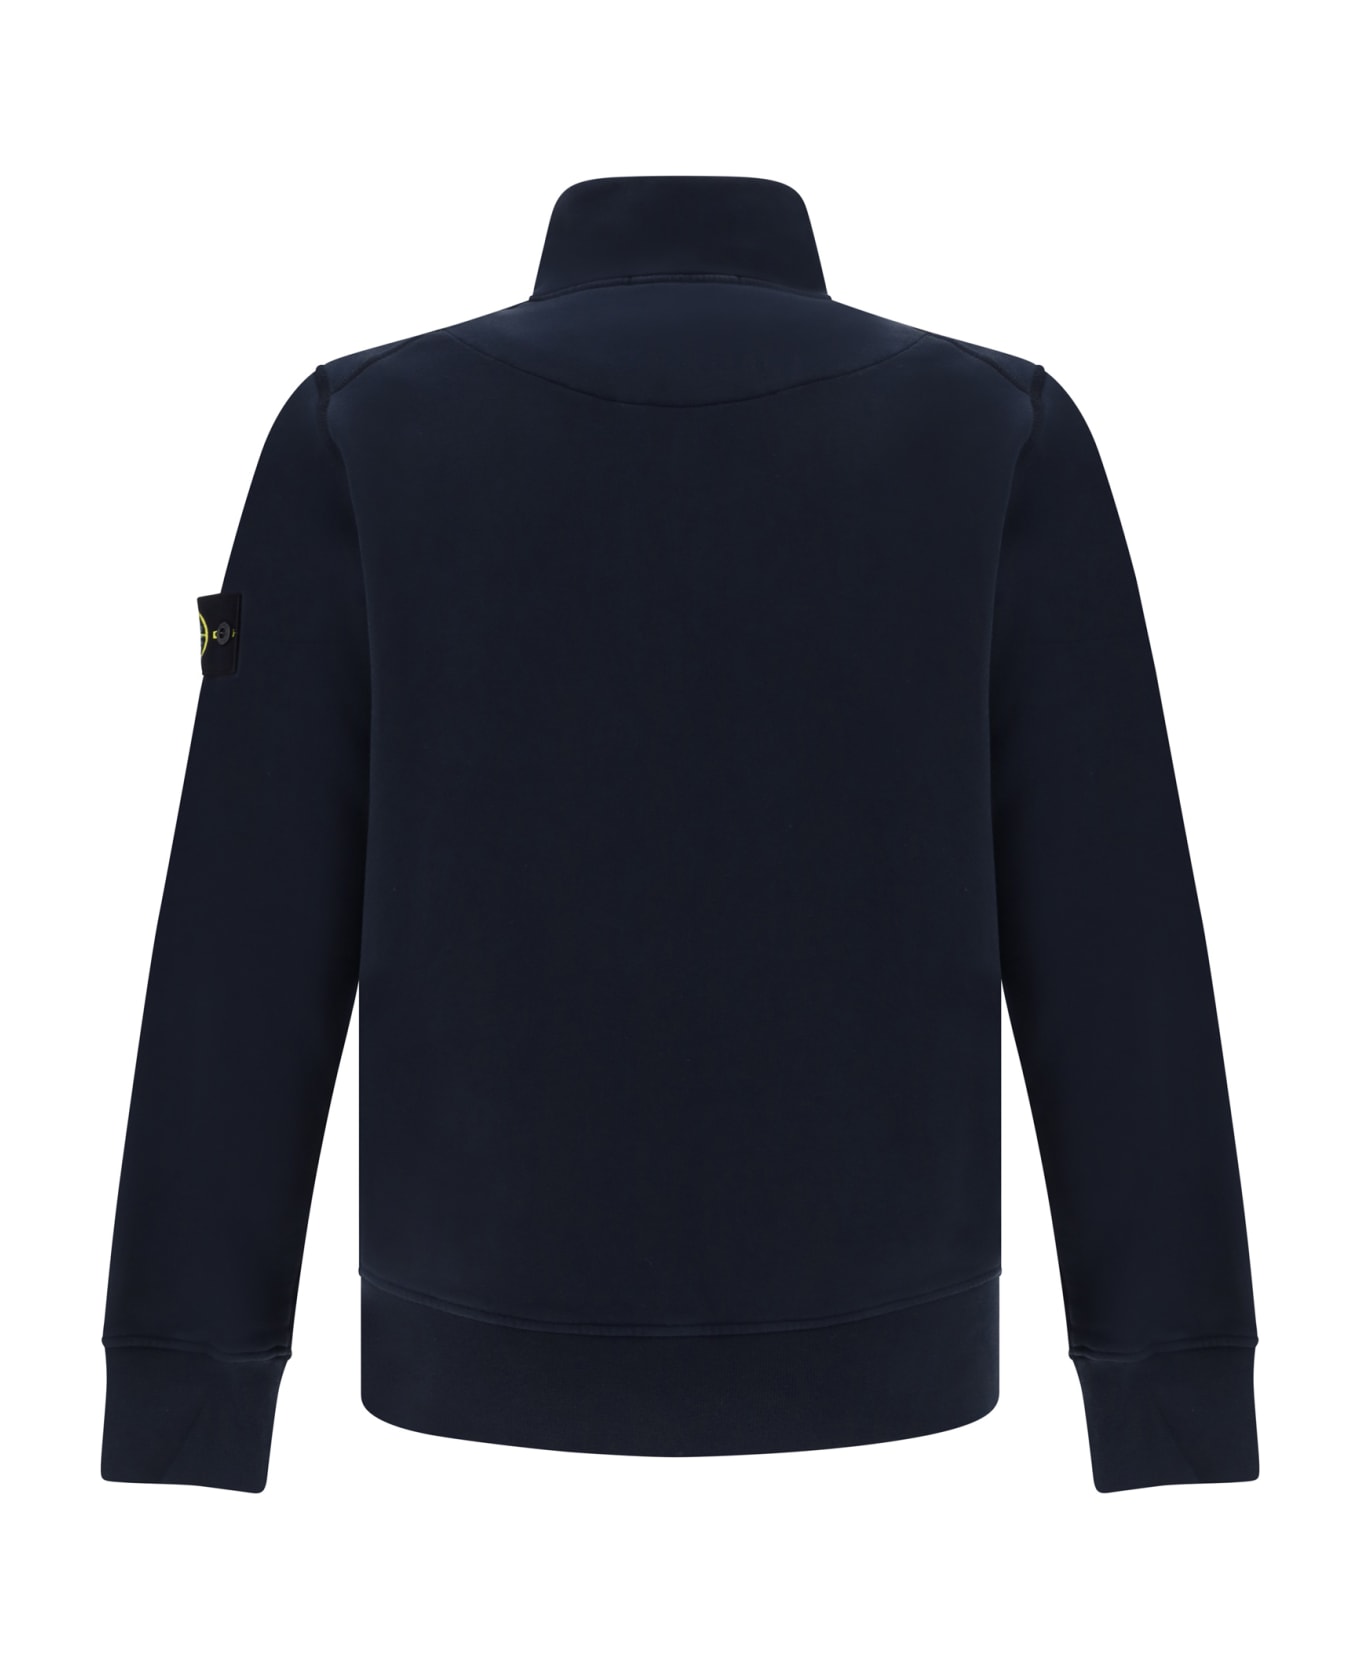 Stone Island Sweatshirt - Navy blue